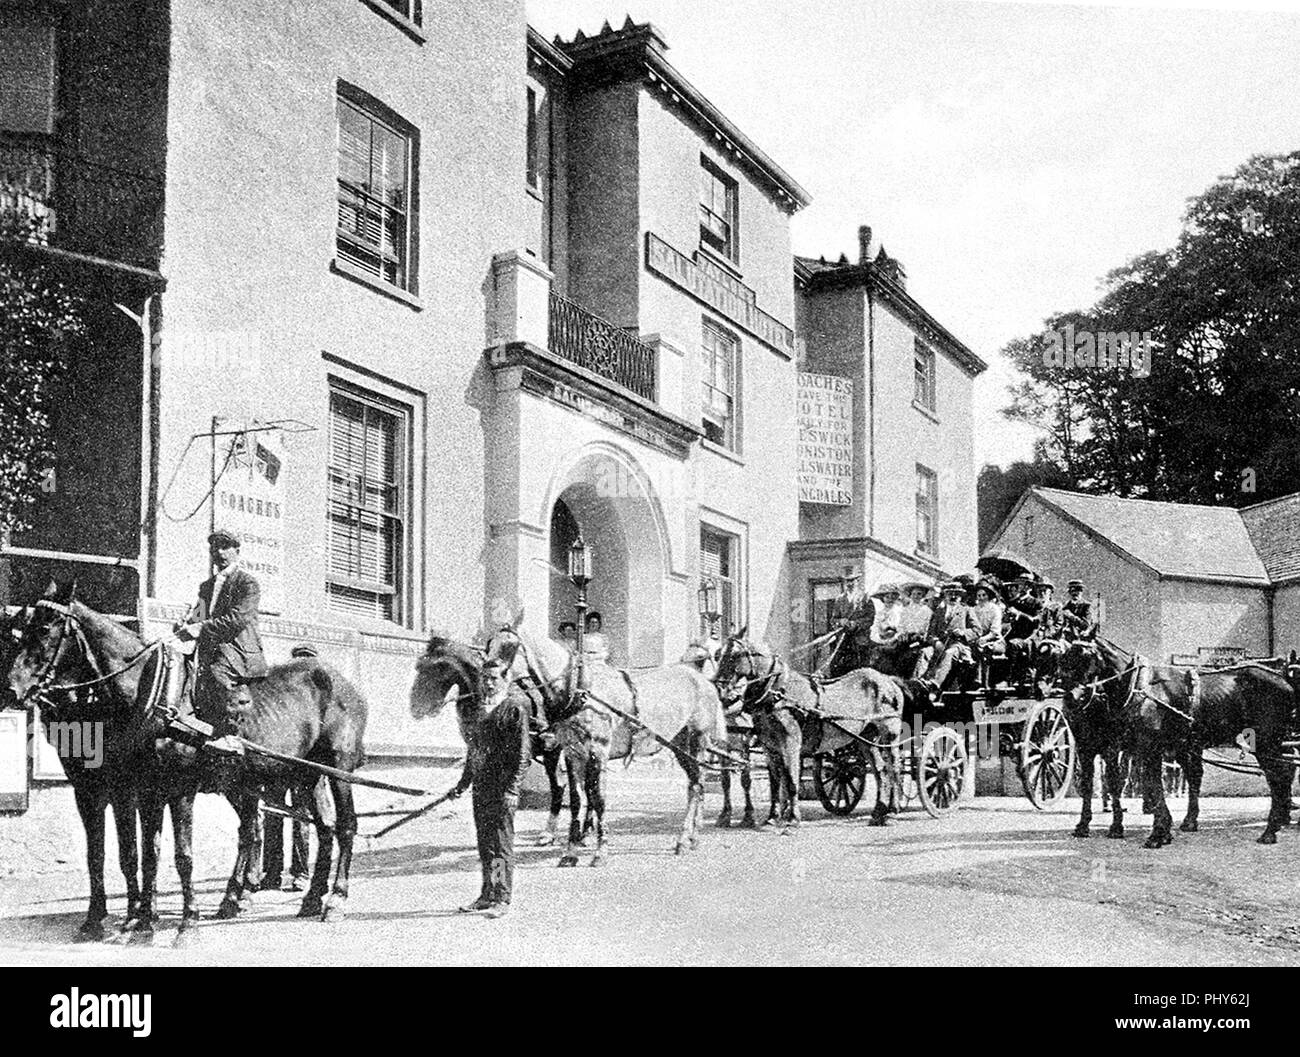 Coaches to Kirkstone Pass, Ambleside, early 1900s Stock Photo